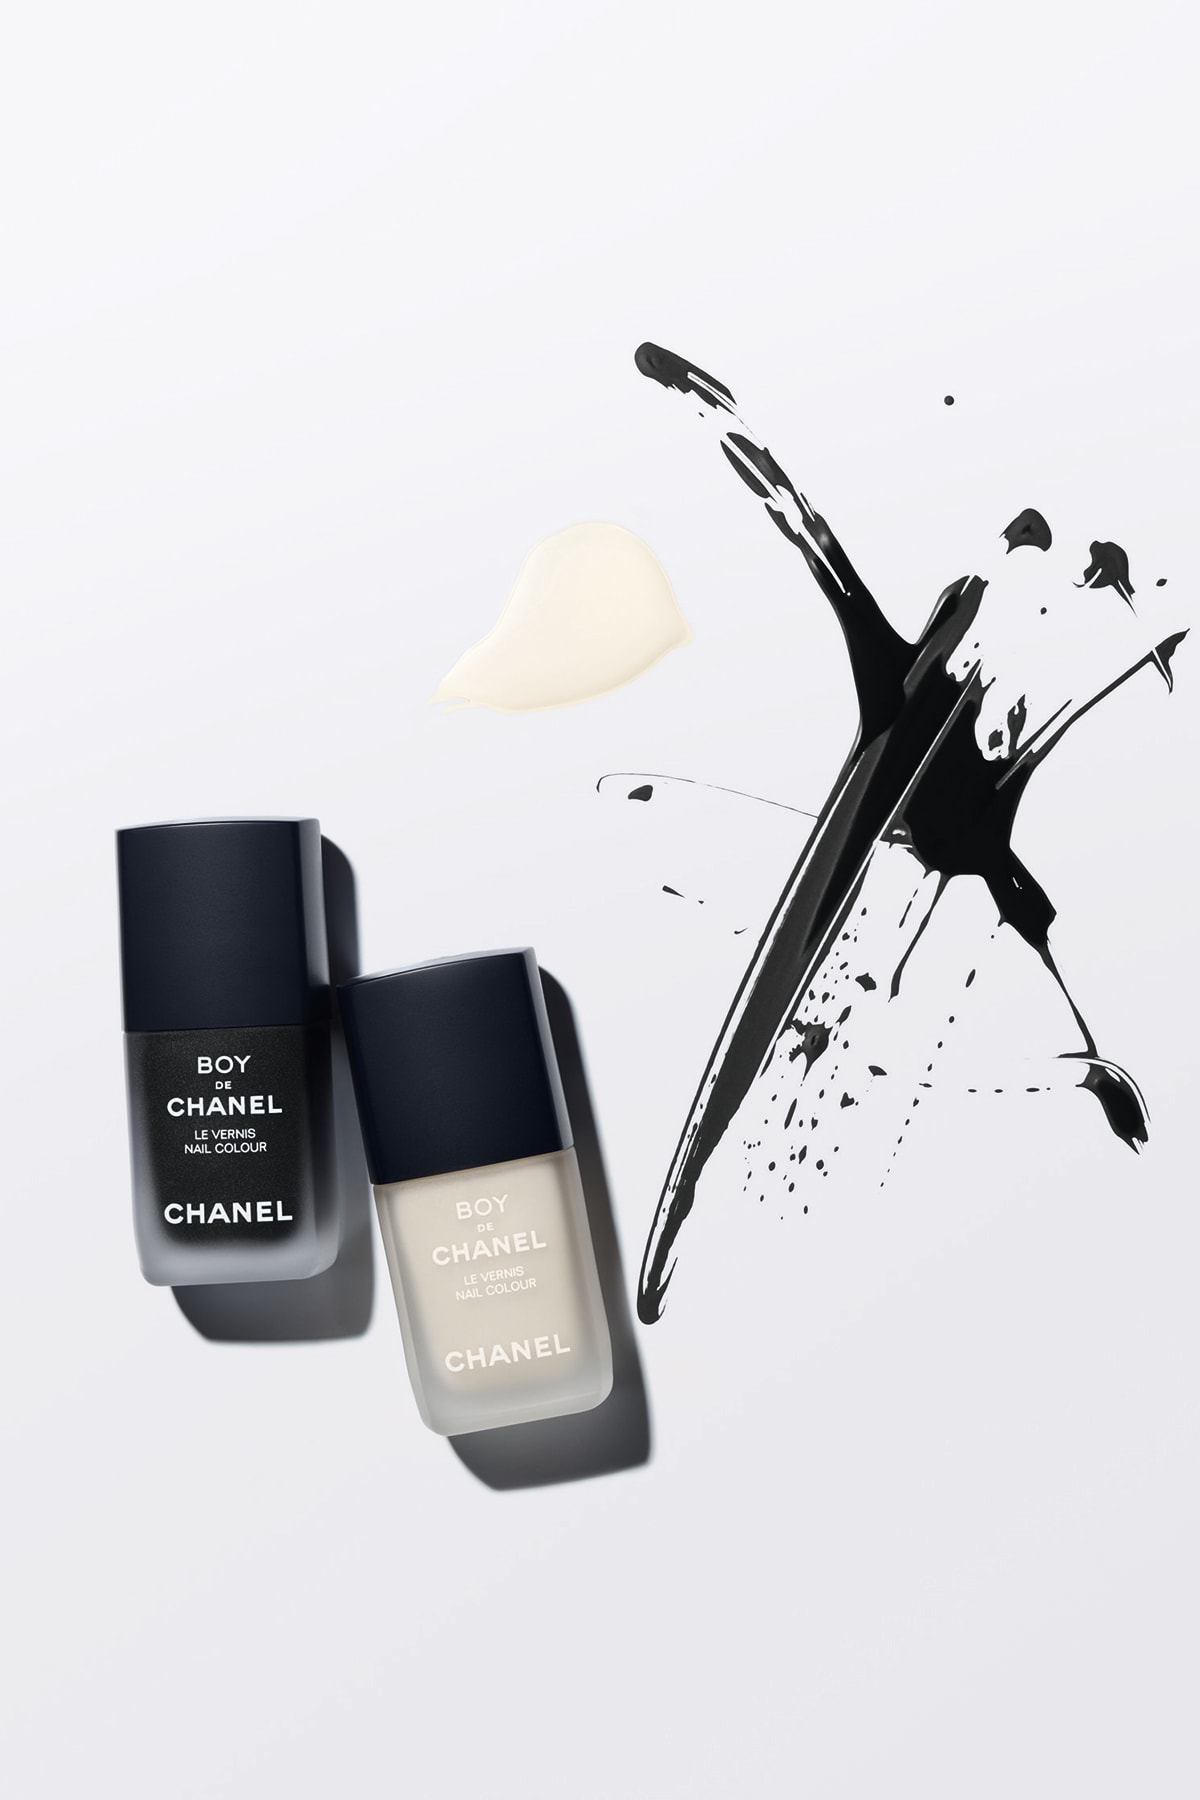 Chanel Beauty Makeup Mens Boy de Collection Nail Polish Eyeliner Concealer